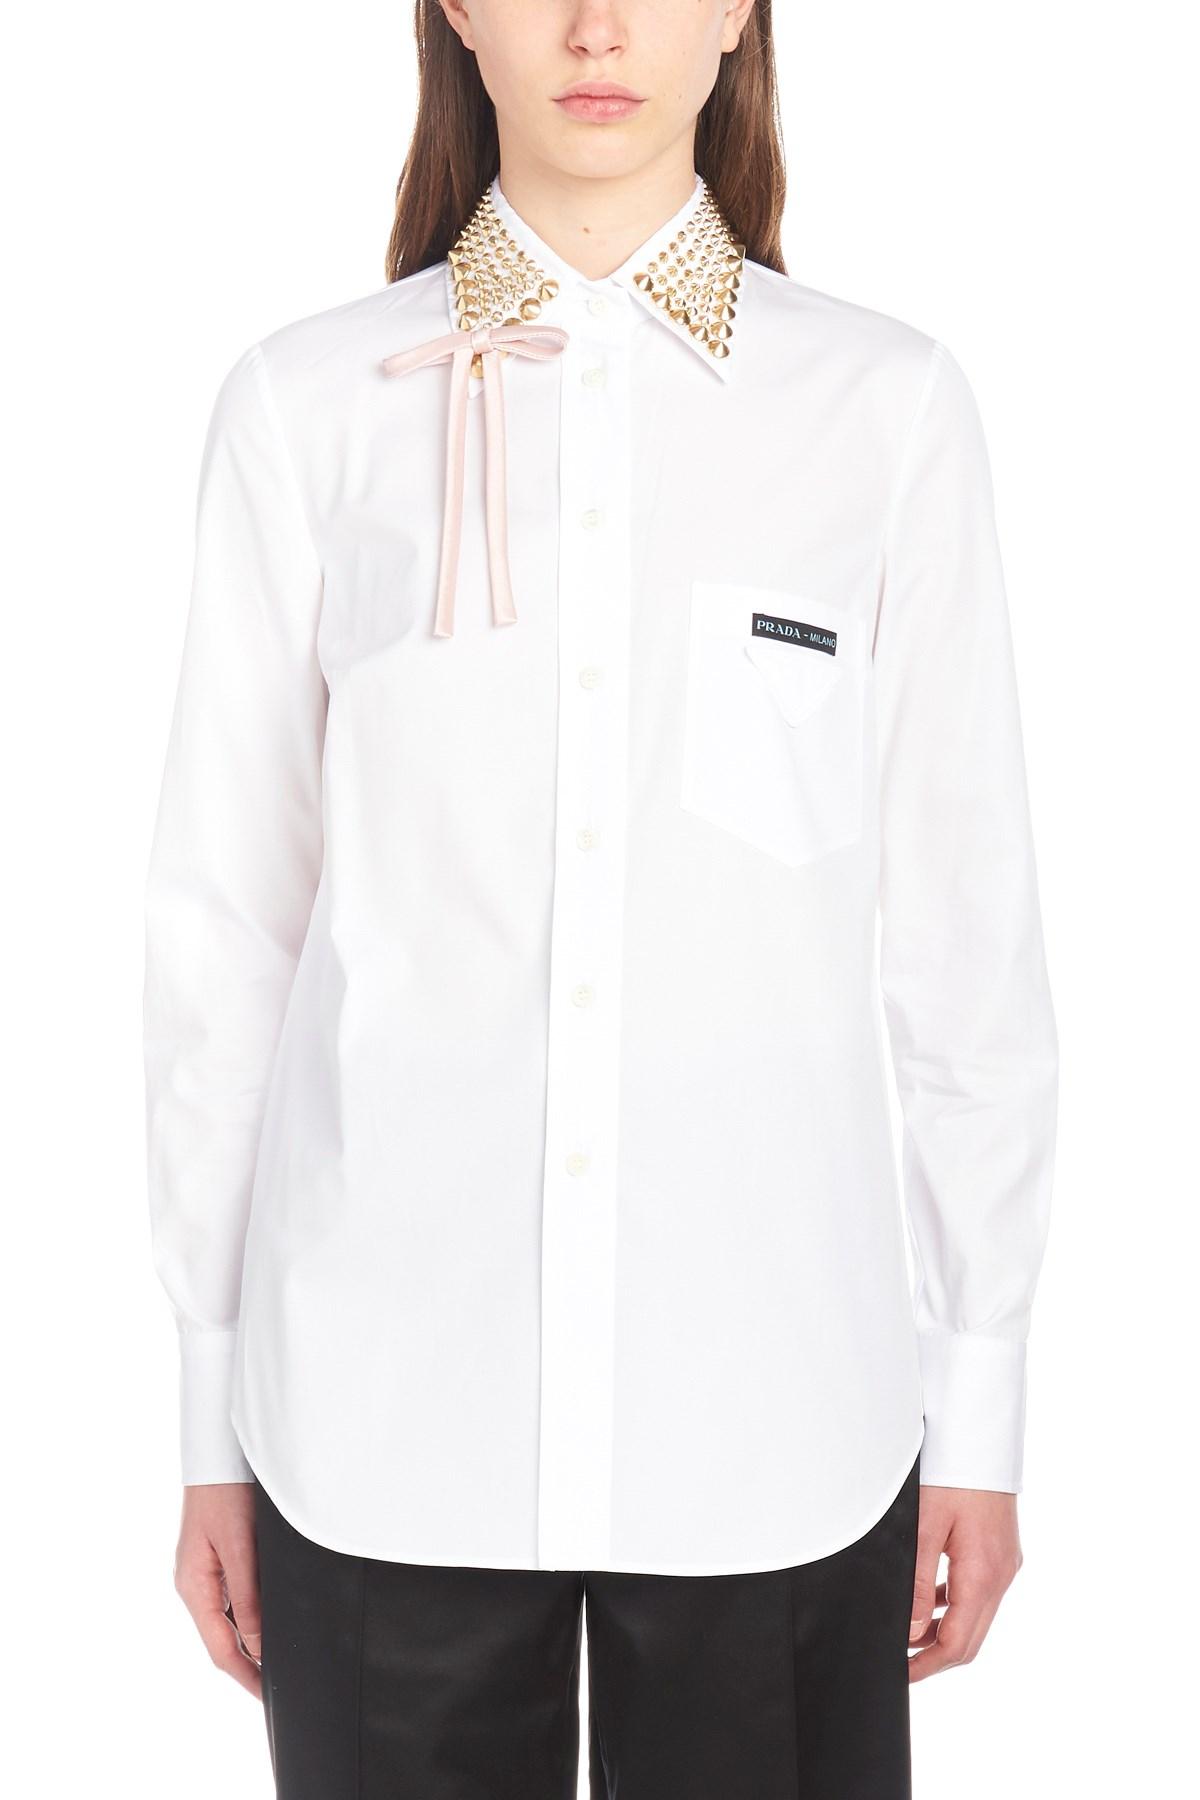 Prada Studded Neckline Shirt in White - Lyst